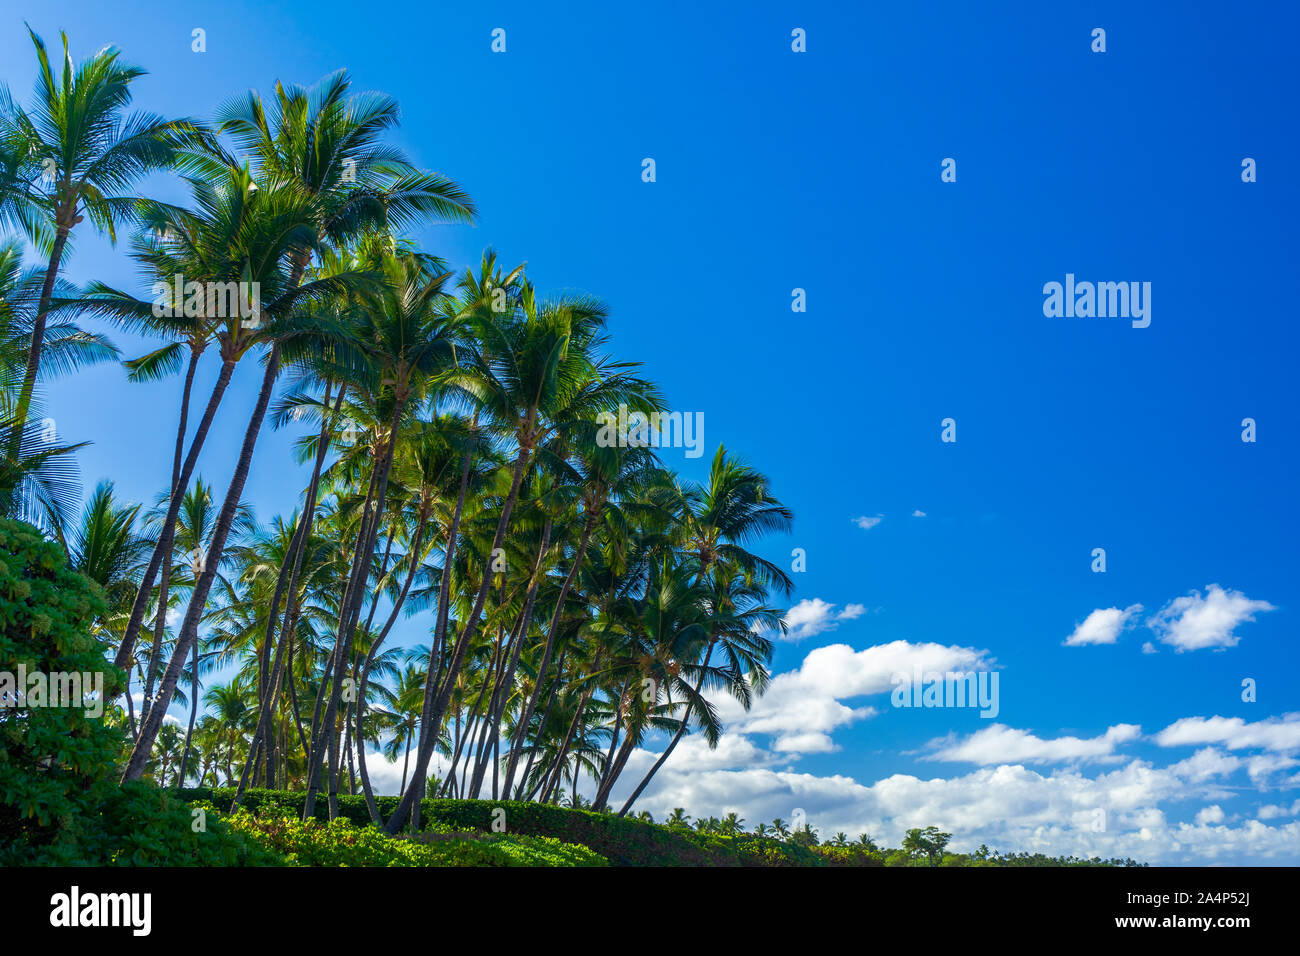 Group of palm trees in Kihei, Hawaii on th eisland of Maui. Stock Photo